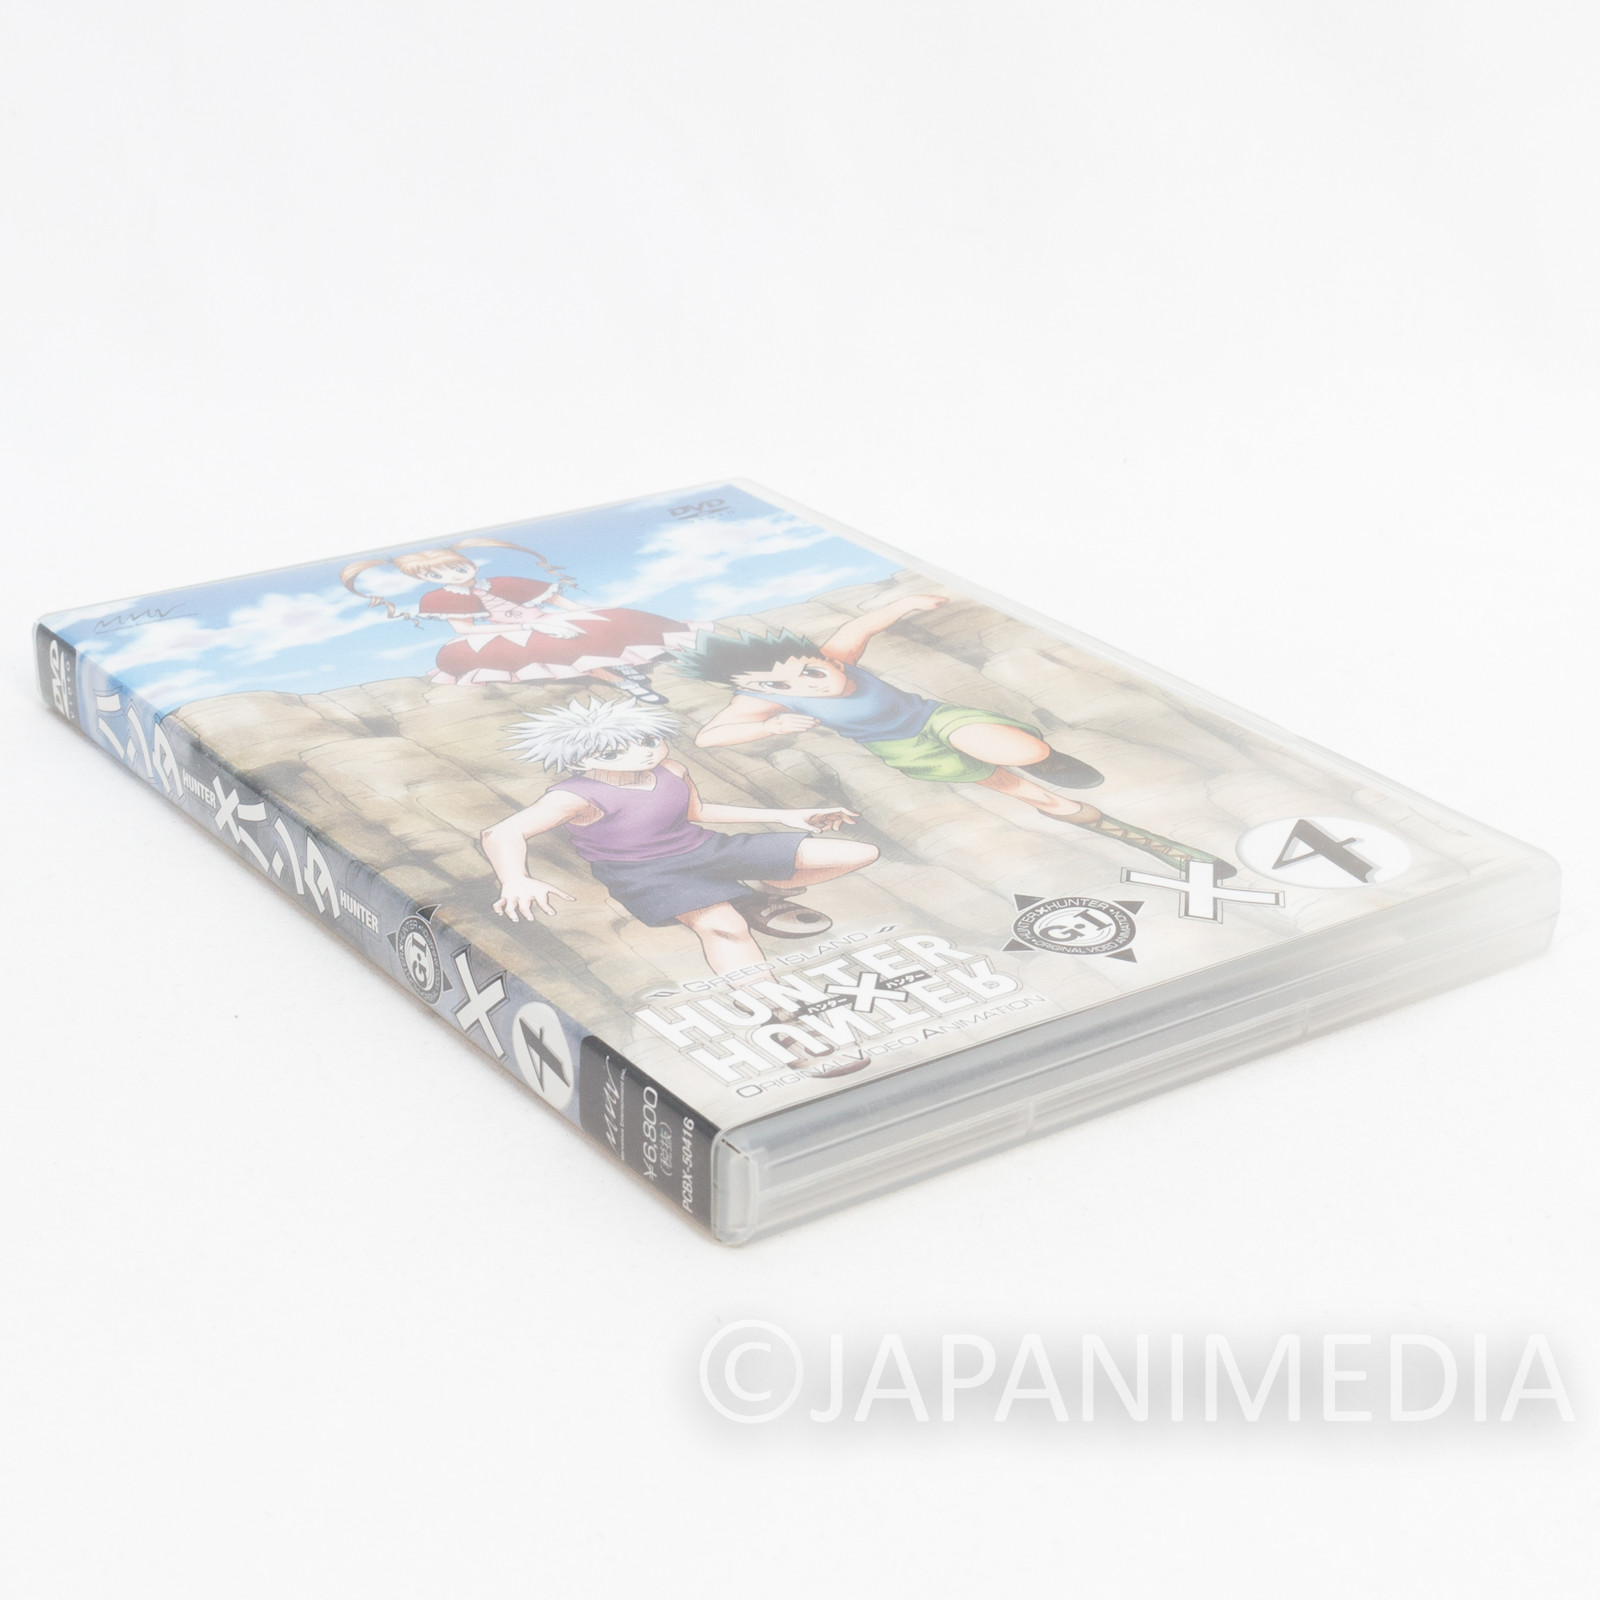 HUNTER x HUNTER Greed Island Vol.4 DVD w/ Post Card JAPAN ANIME